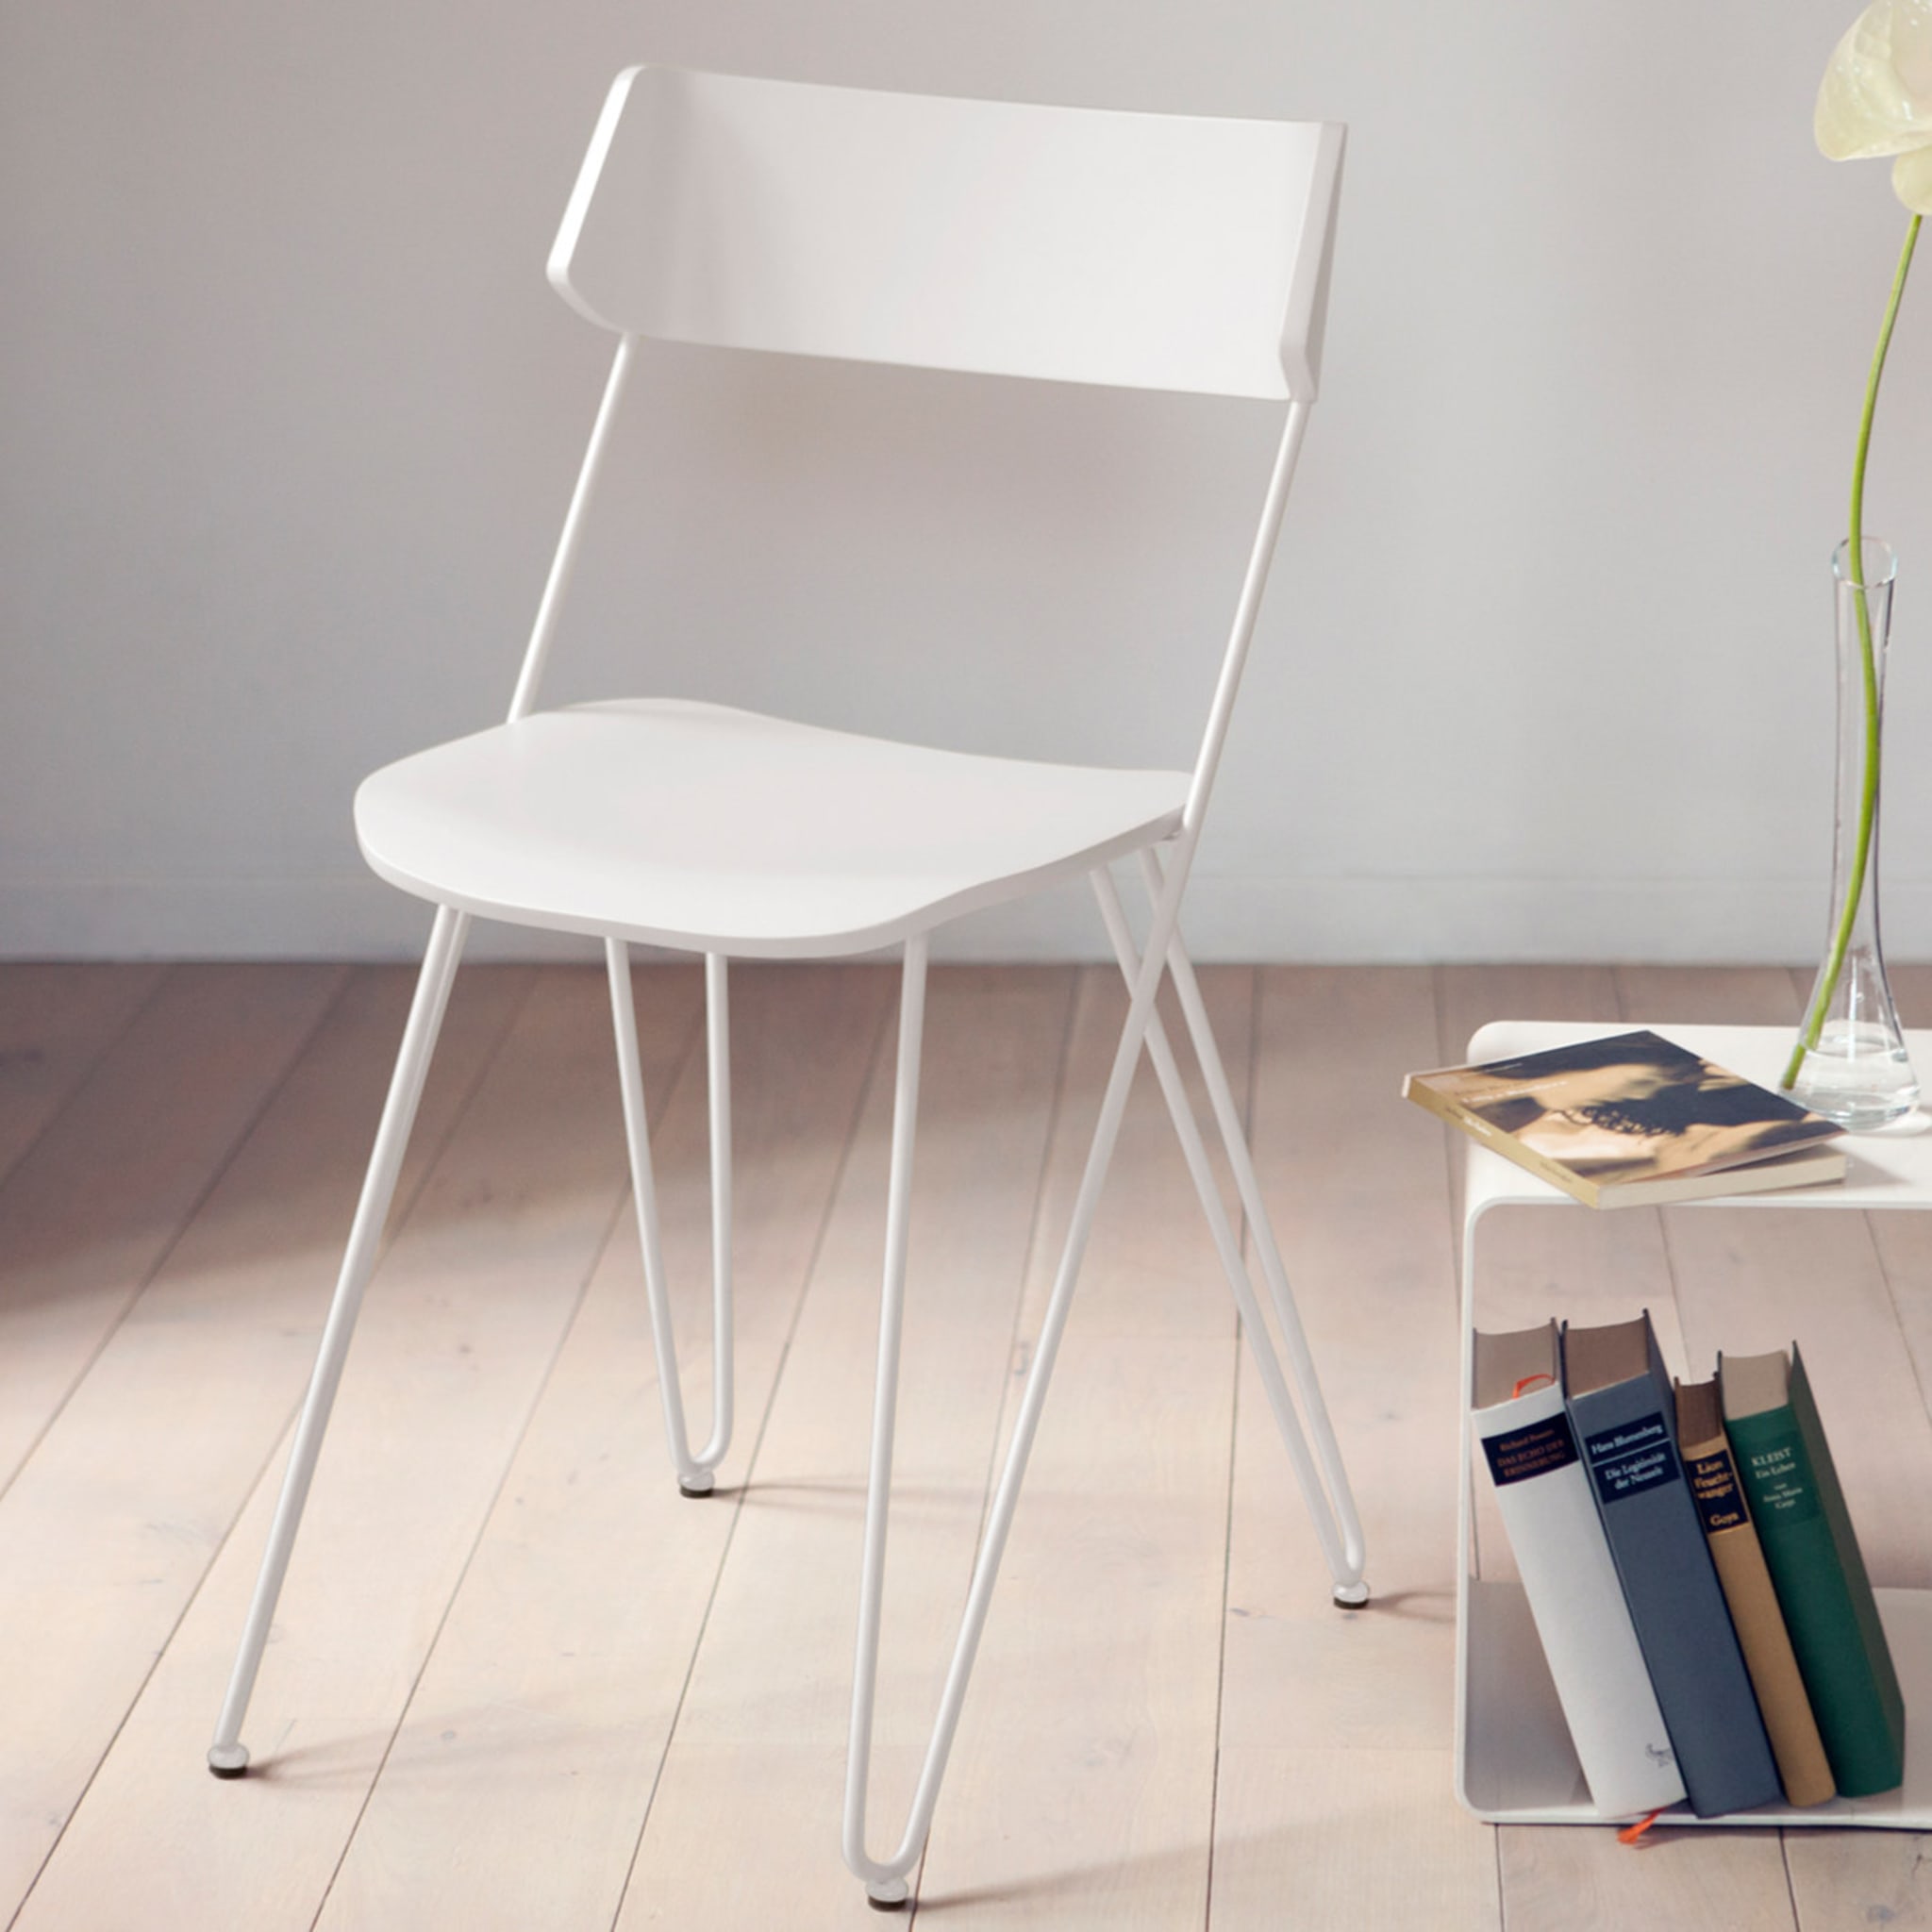 Ibsen One White Chair - Alternative view 3